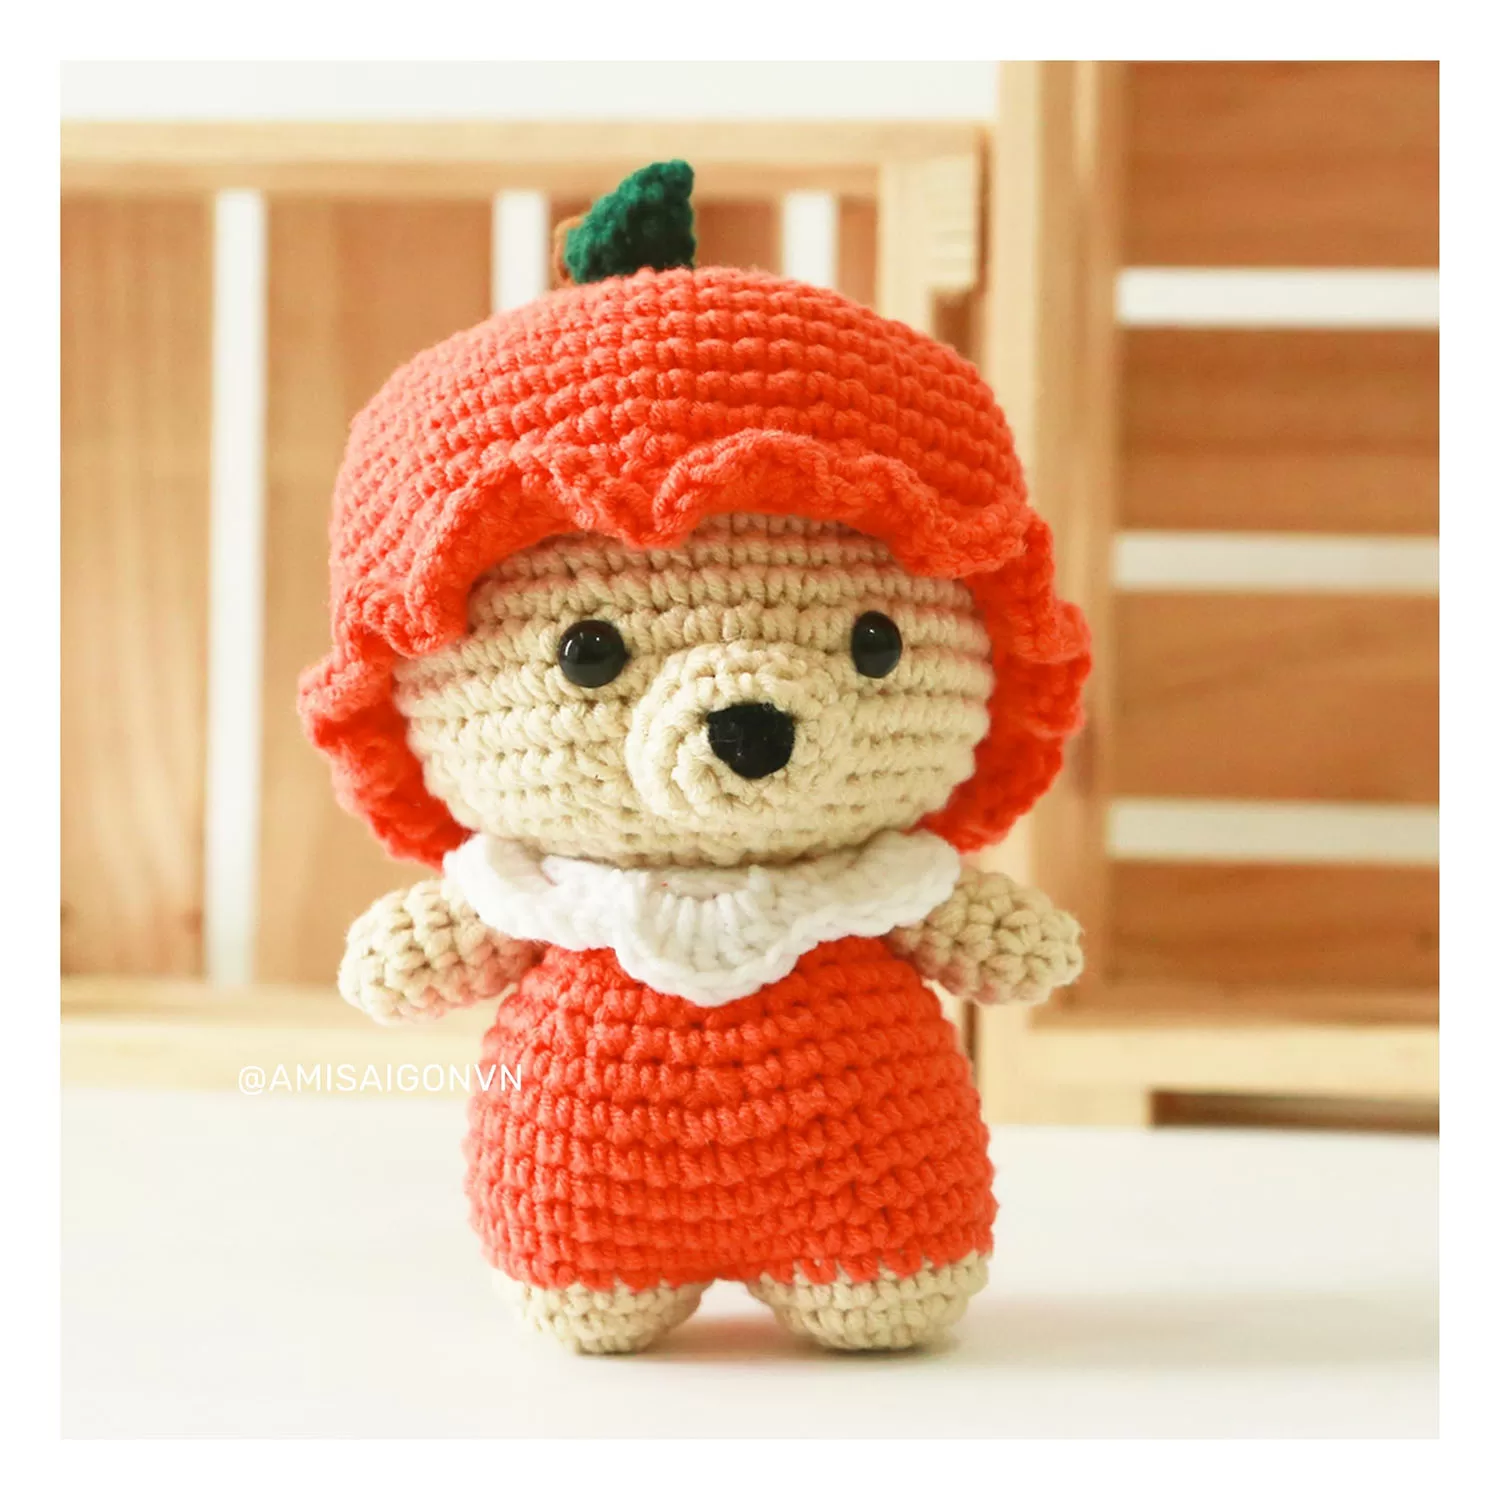 Bear in Orange Outfit Amigurumi | Crochet Pattern | Amigurumi Tutorial PDF in English | AmiSaigon